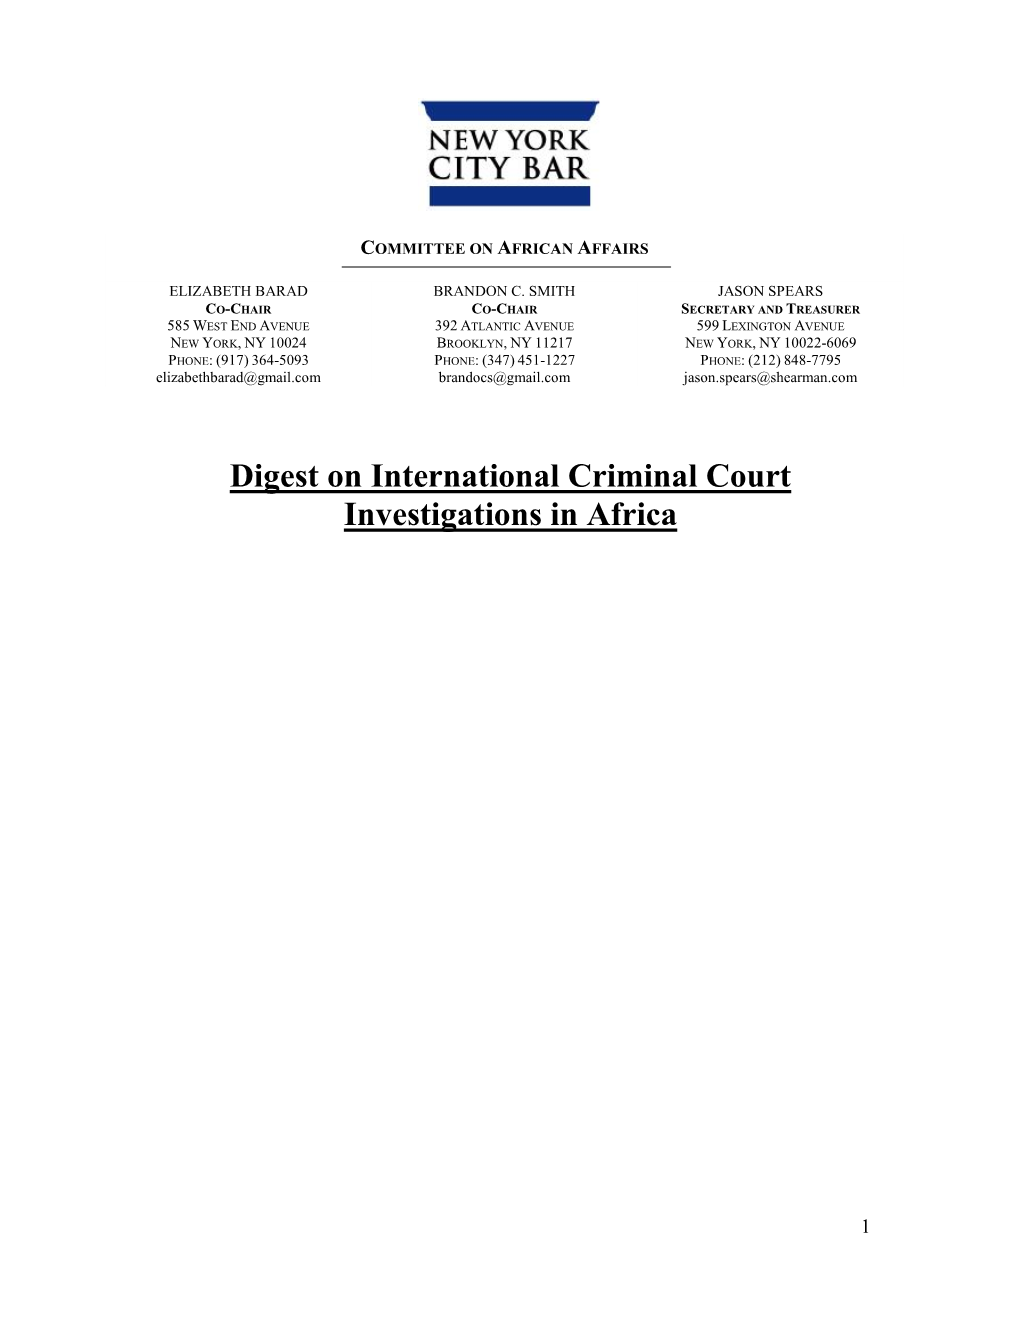 Digest on International Criminal Court Investigations in Africa